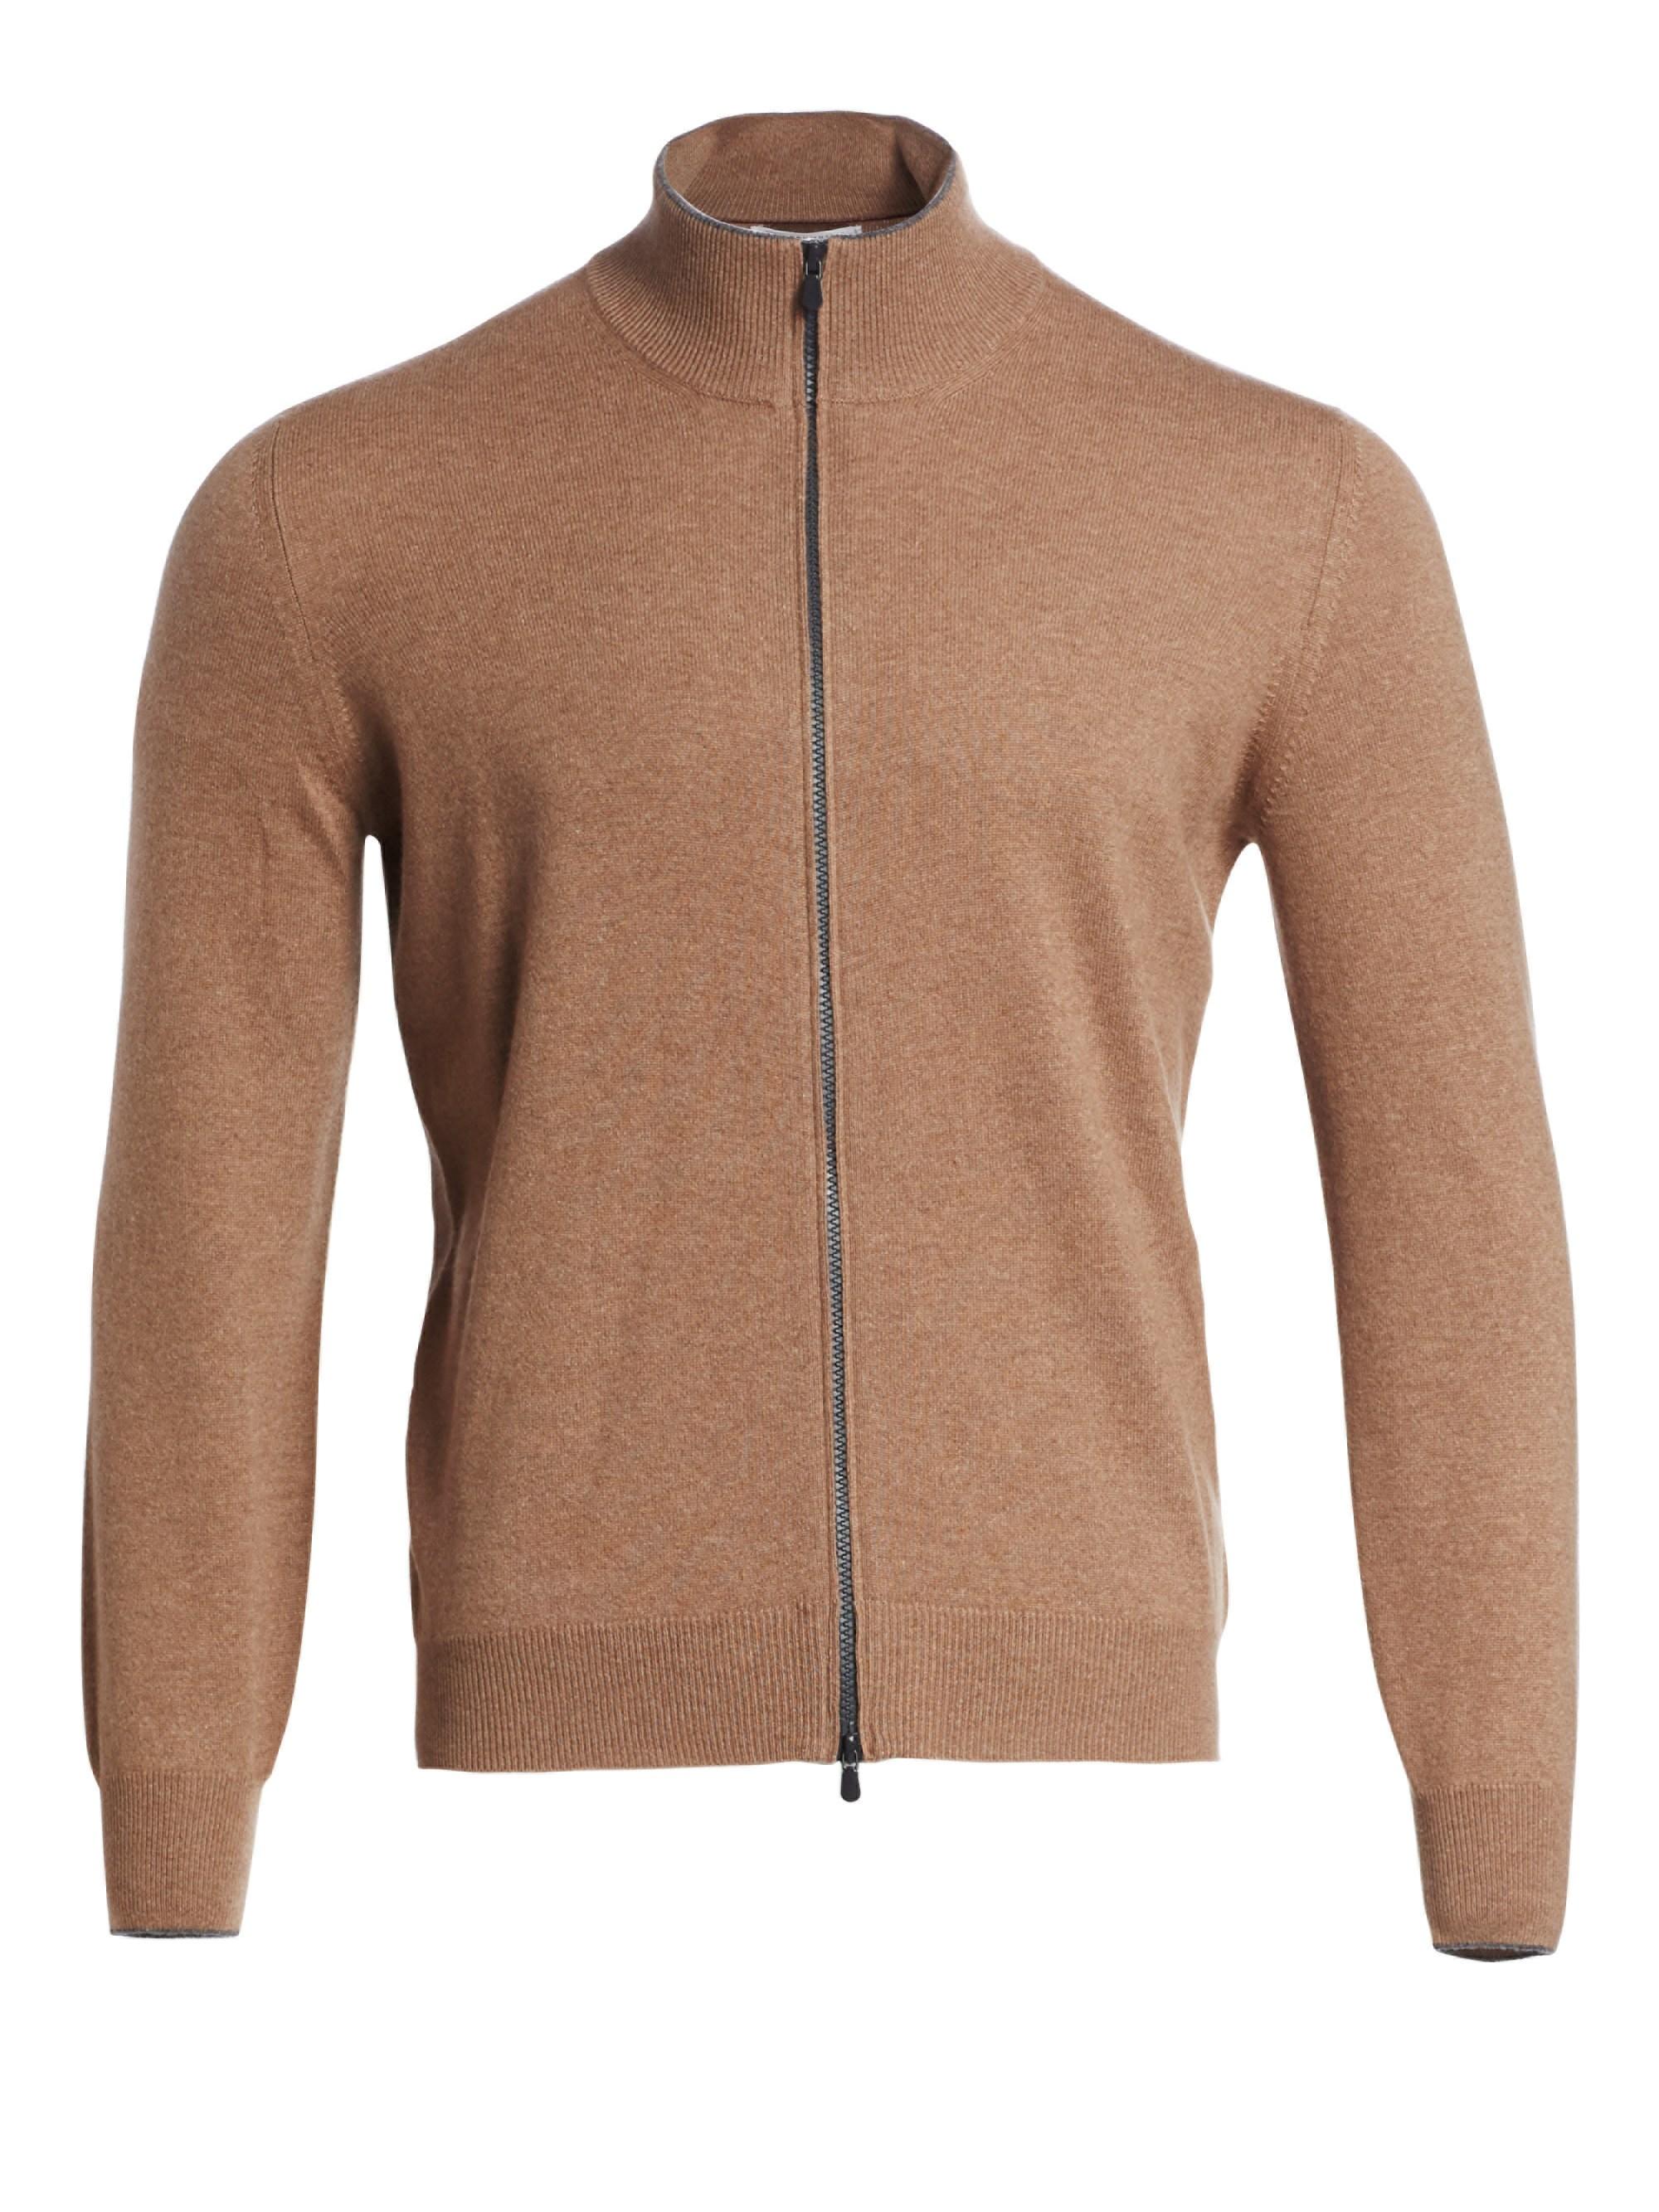 Brunello Cucinelli Cashmere Full Zip Sweater for Men - Lyst